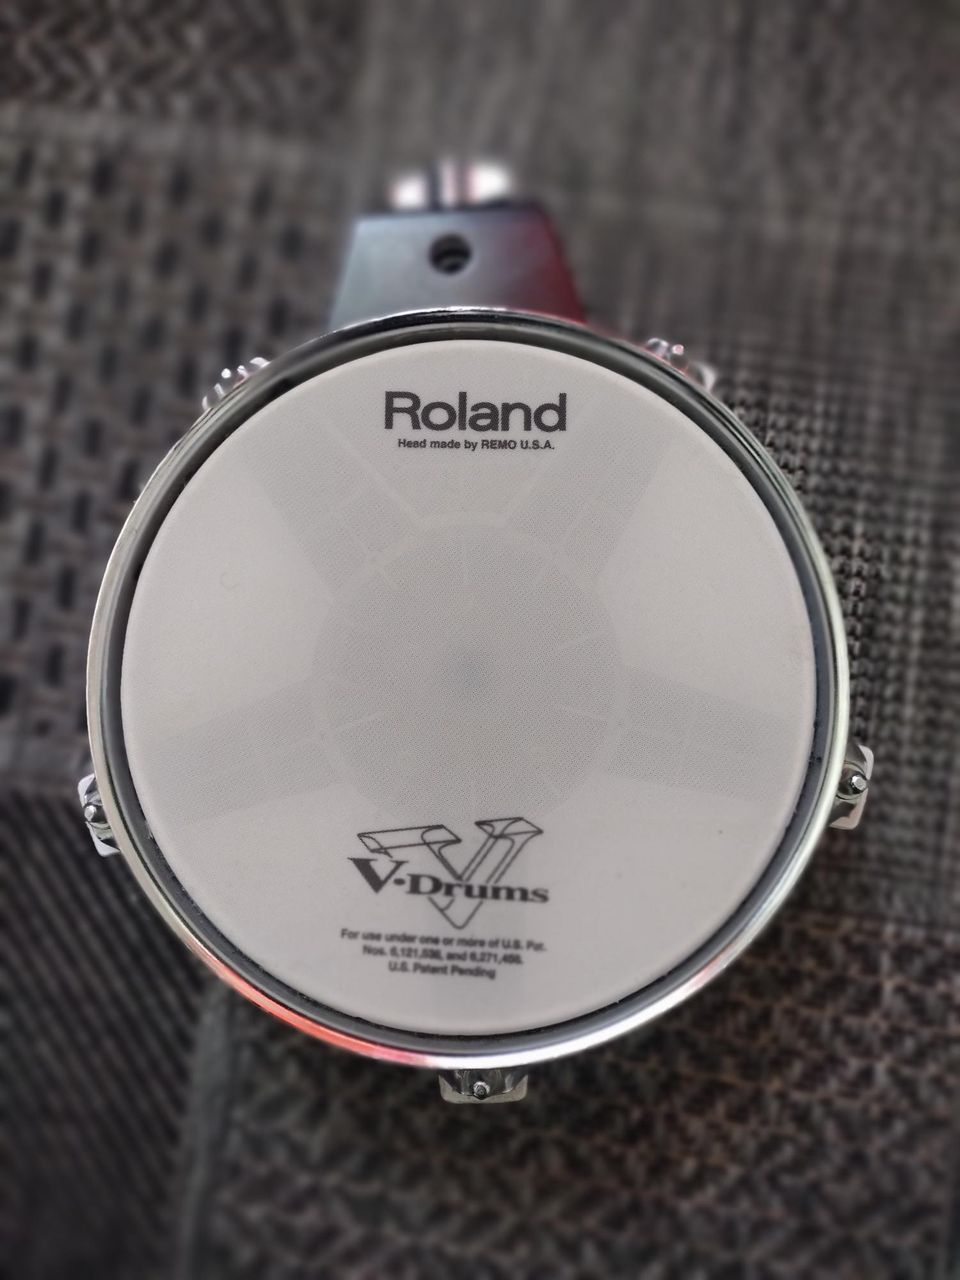 Roland pad pd80